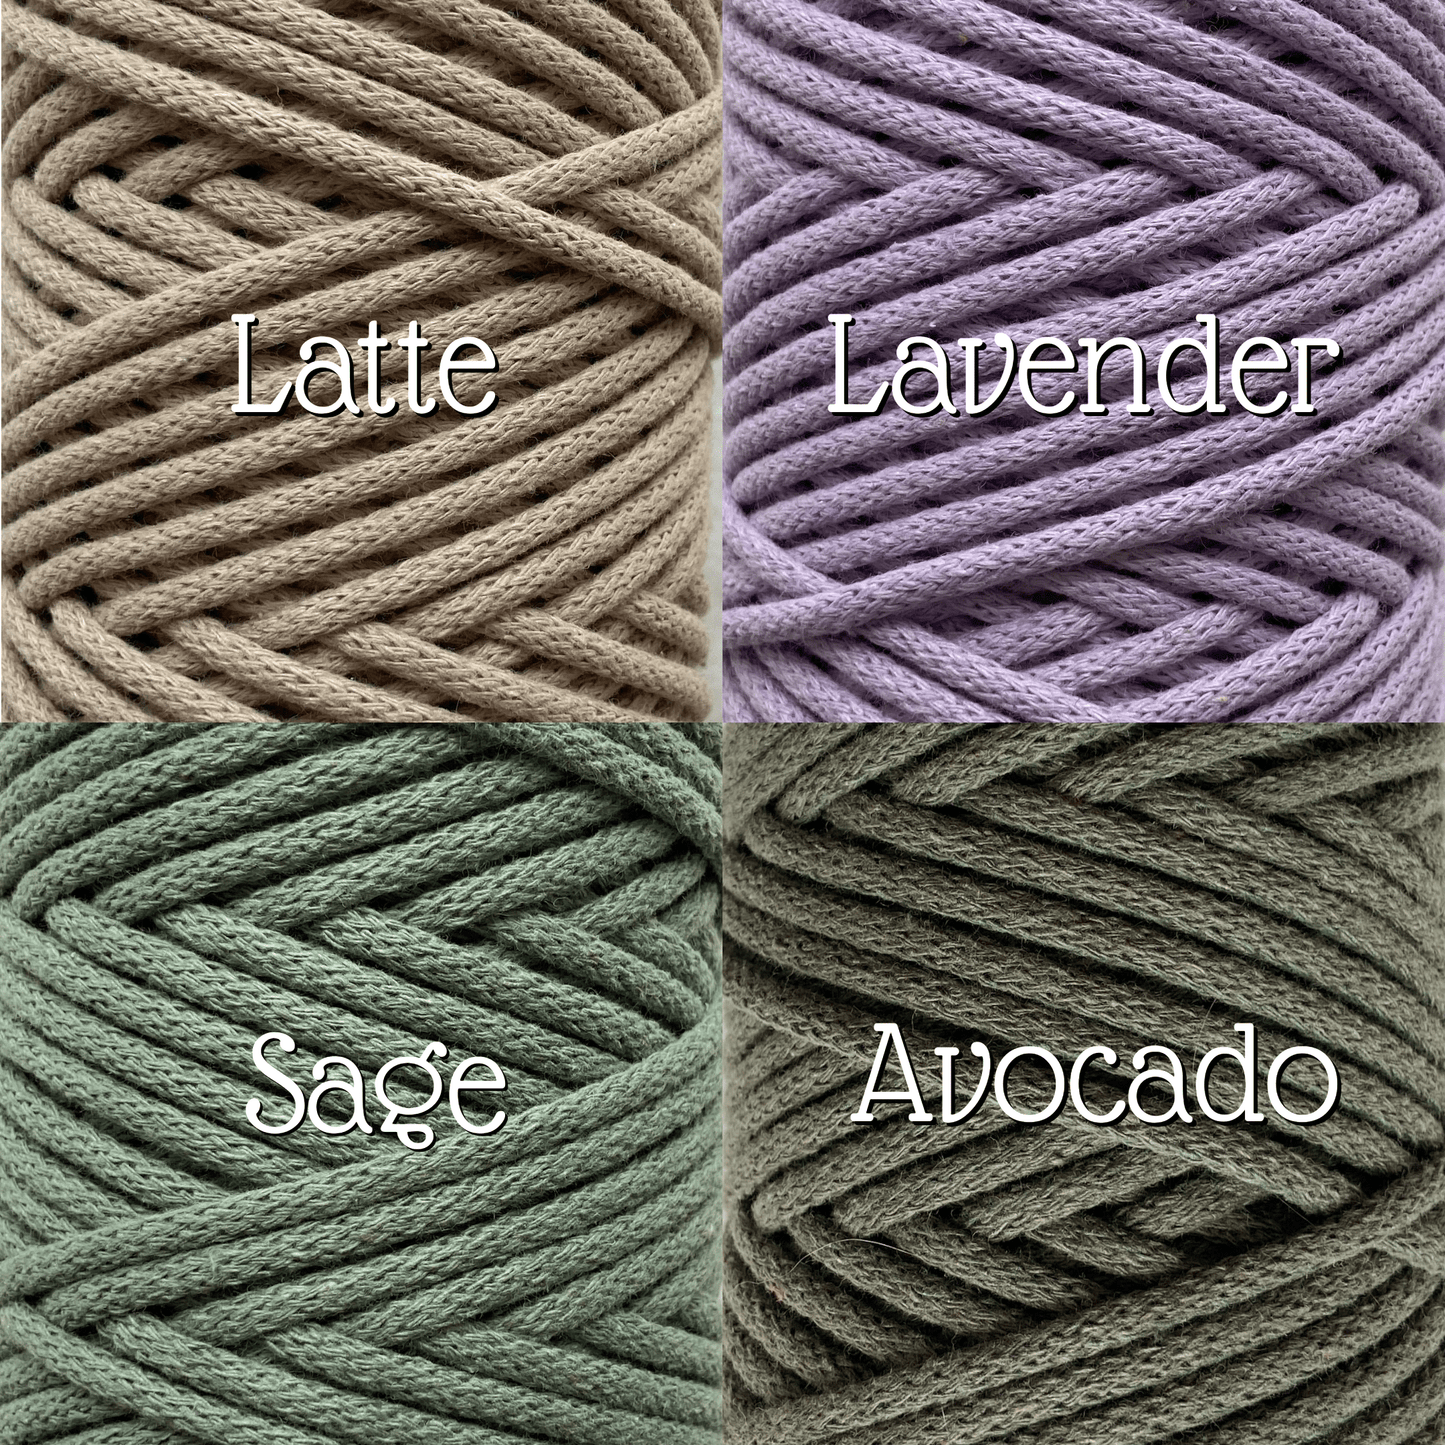 3mm Nylon Cord Braided Macrame Cord 200g, 219 Yards - 100% Nylon Cord - Soft Cord for Macrame Projects - 3mm Crochet Bag Cord - Macrame Rope - Crochet